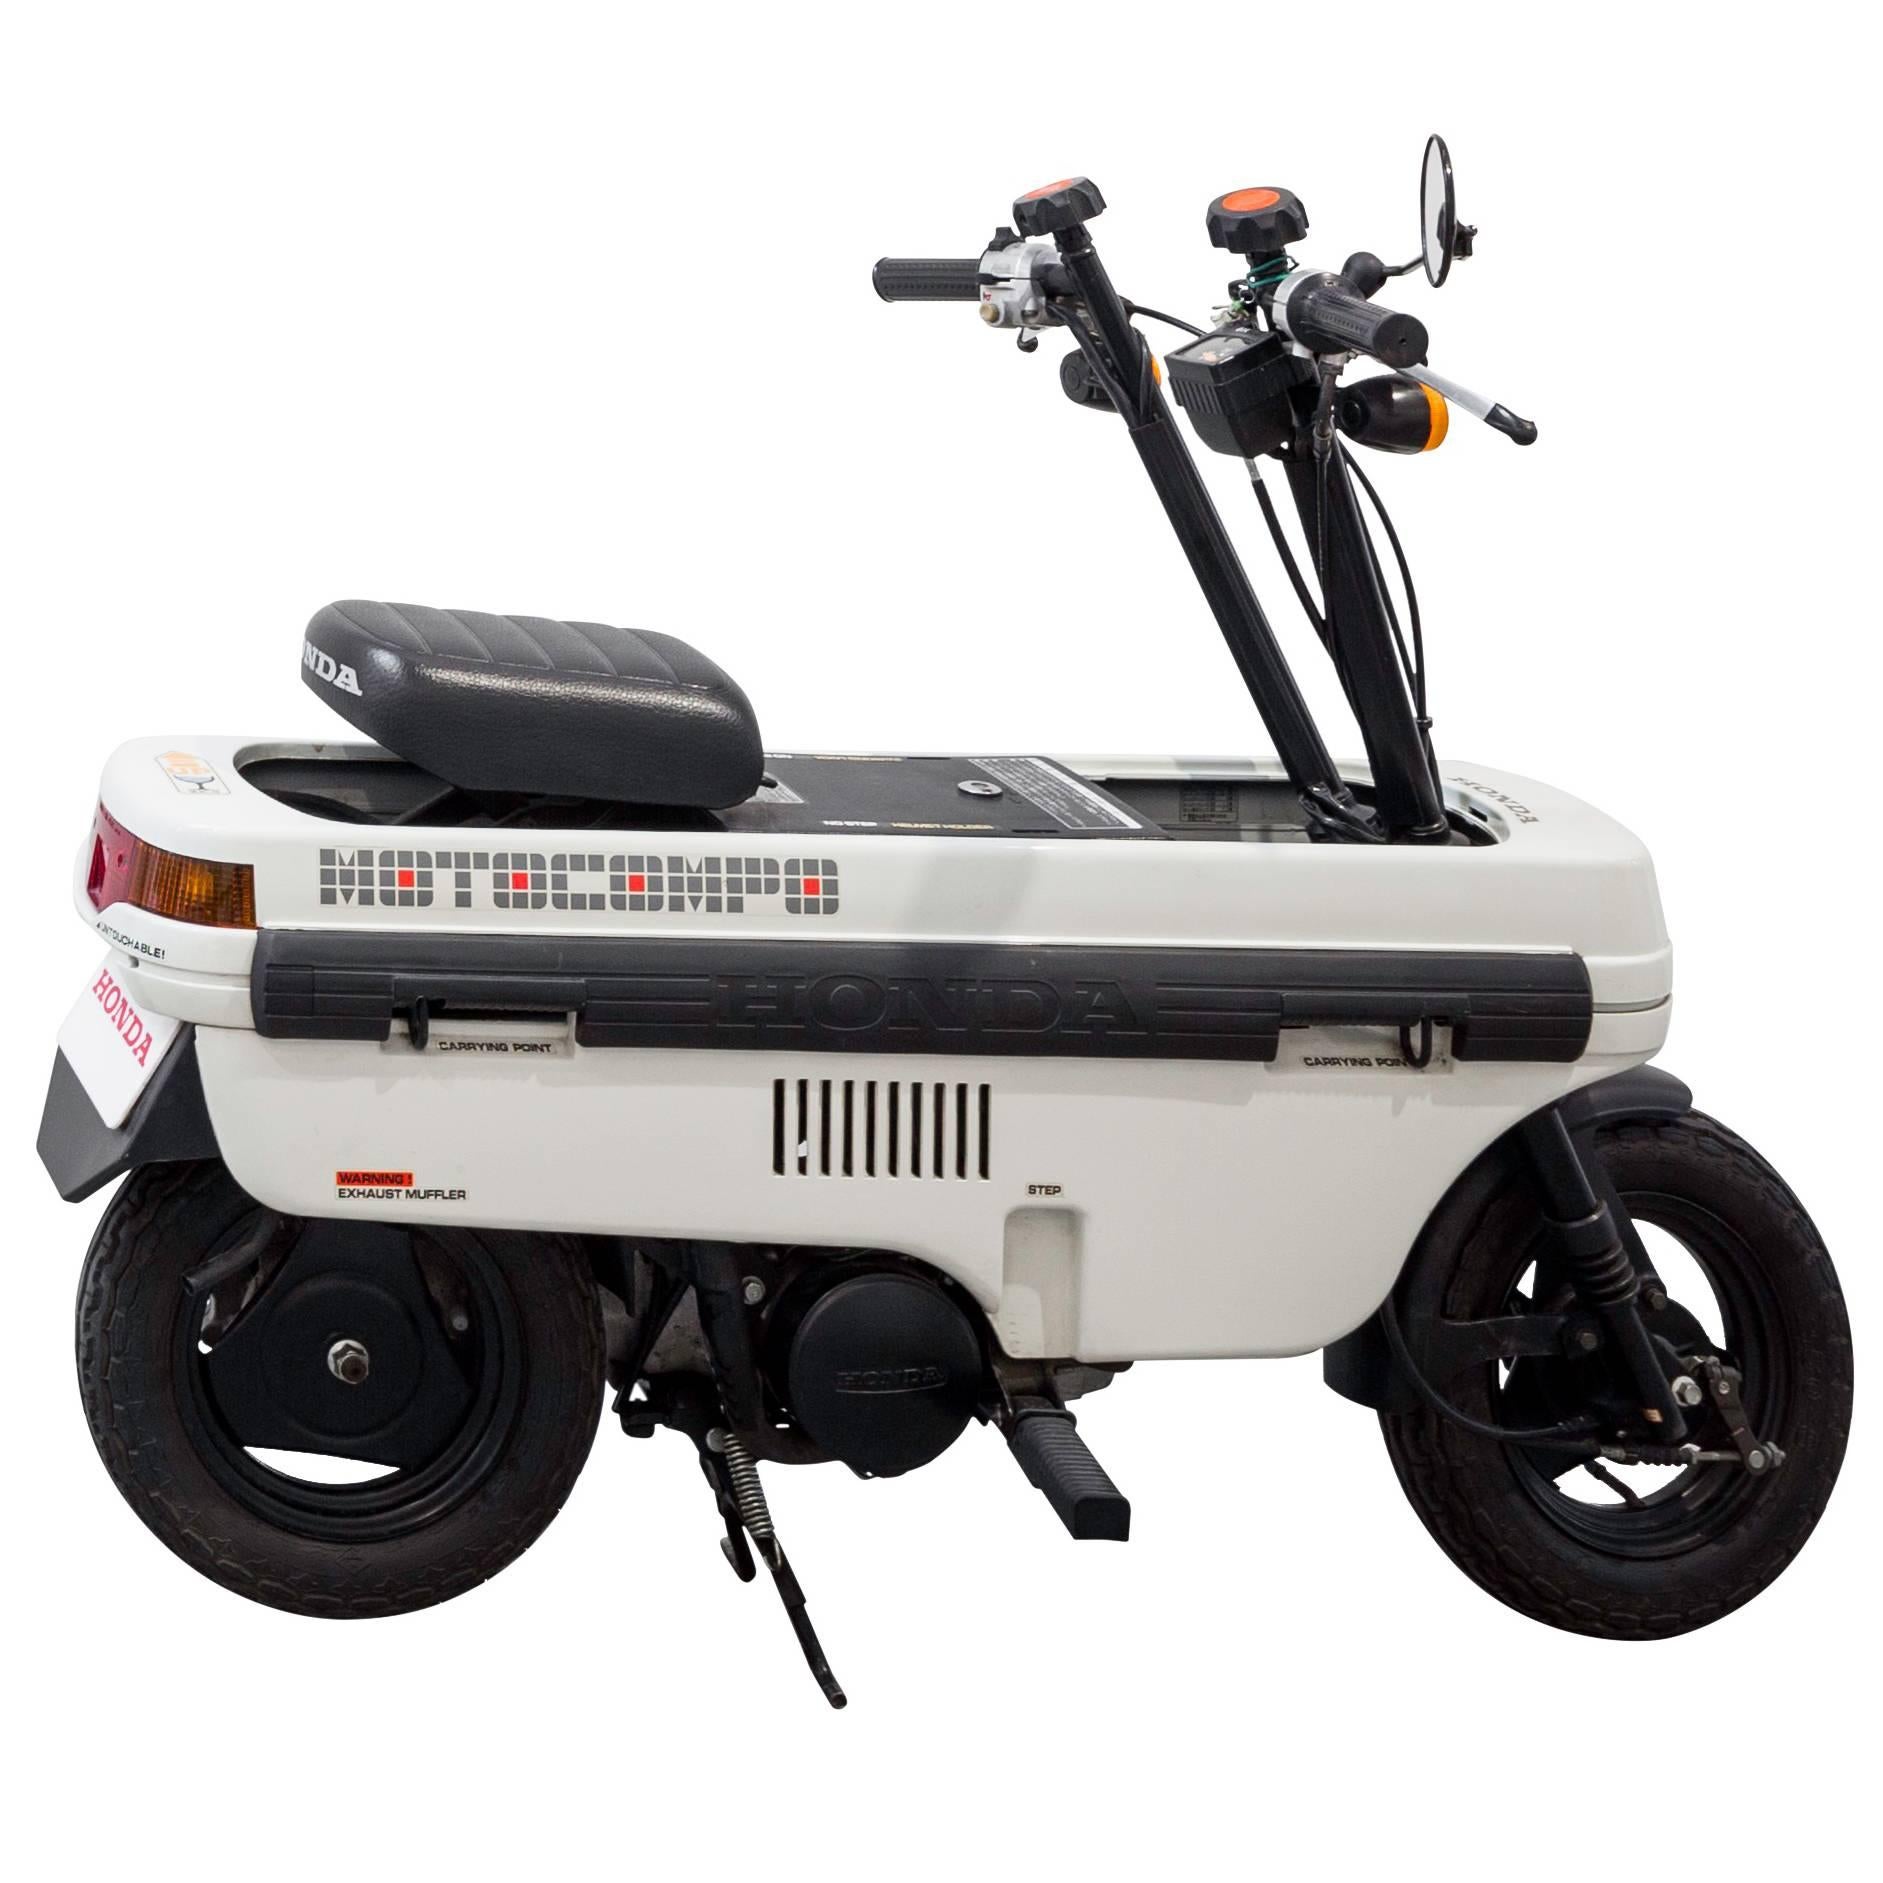 "Honda NCZ 50 Motocompo, AB12, Trunk Bike" by Honda Motor Company For Sale